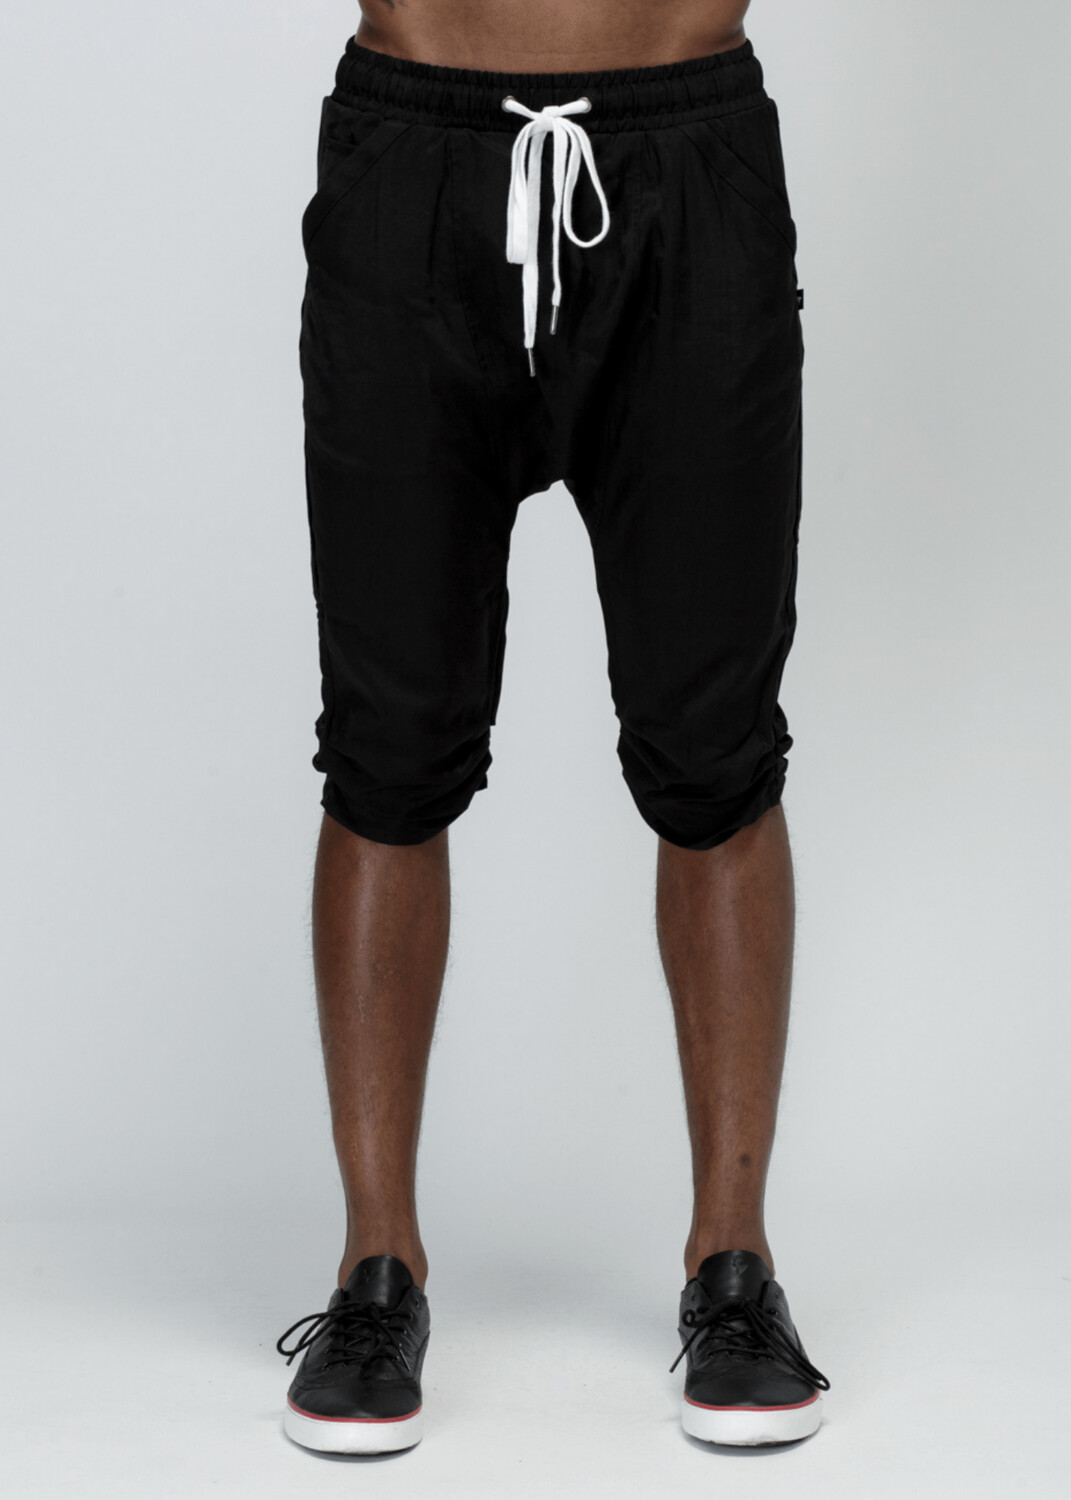 Konus Men's Drop Crotch Over Knee Shorts in Black